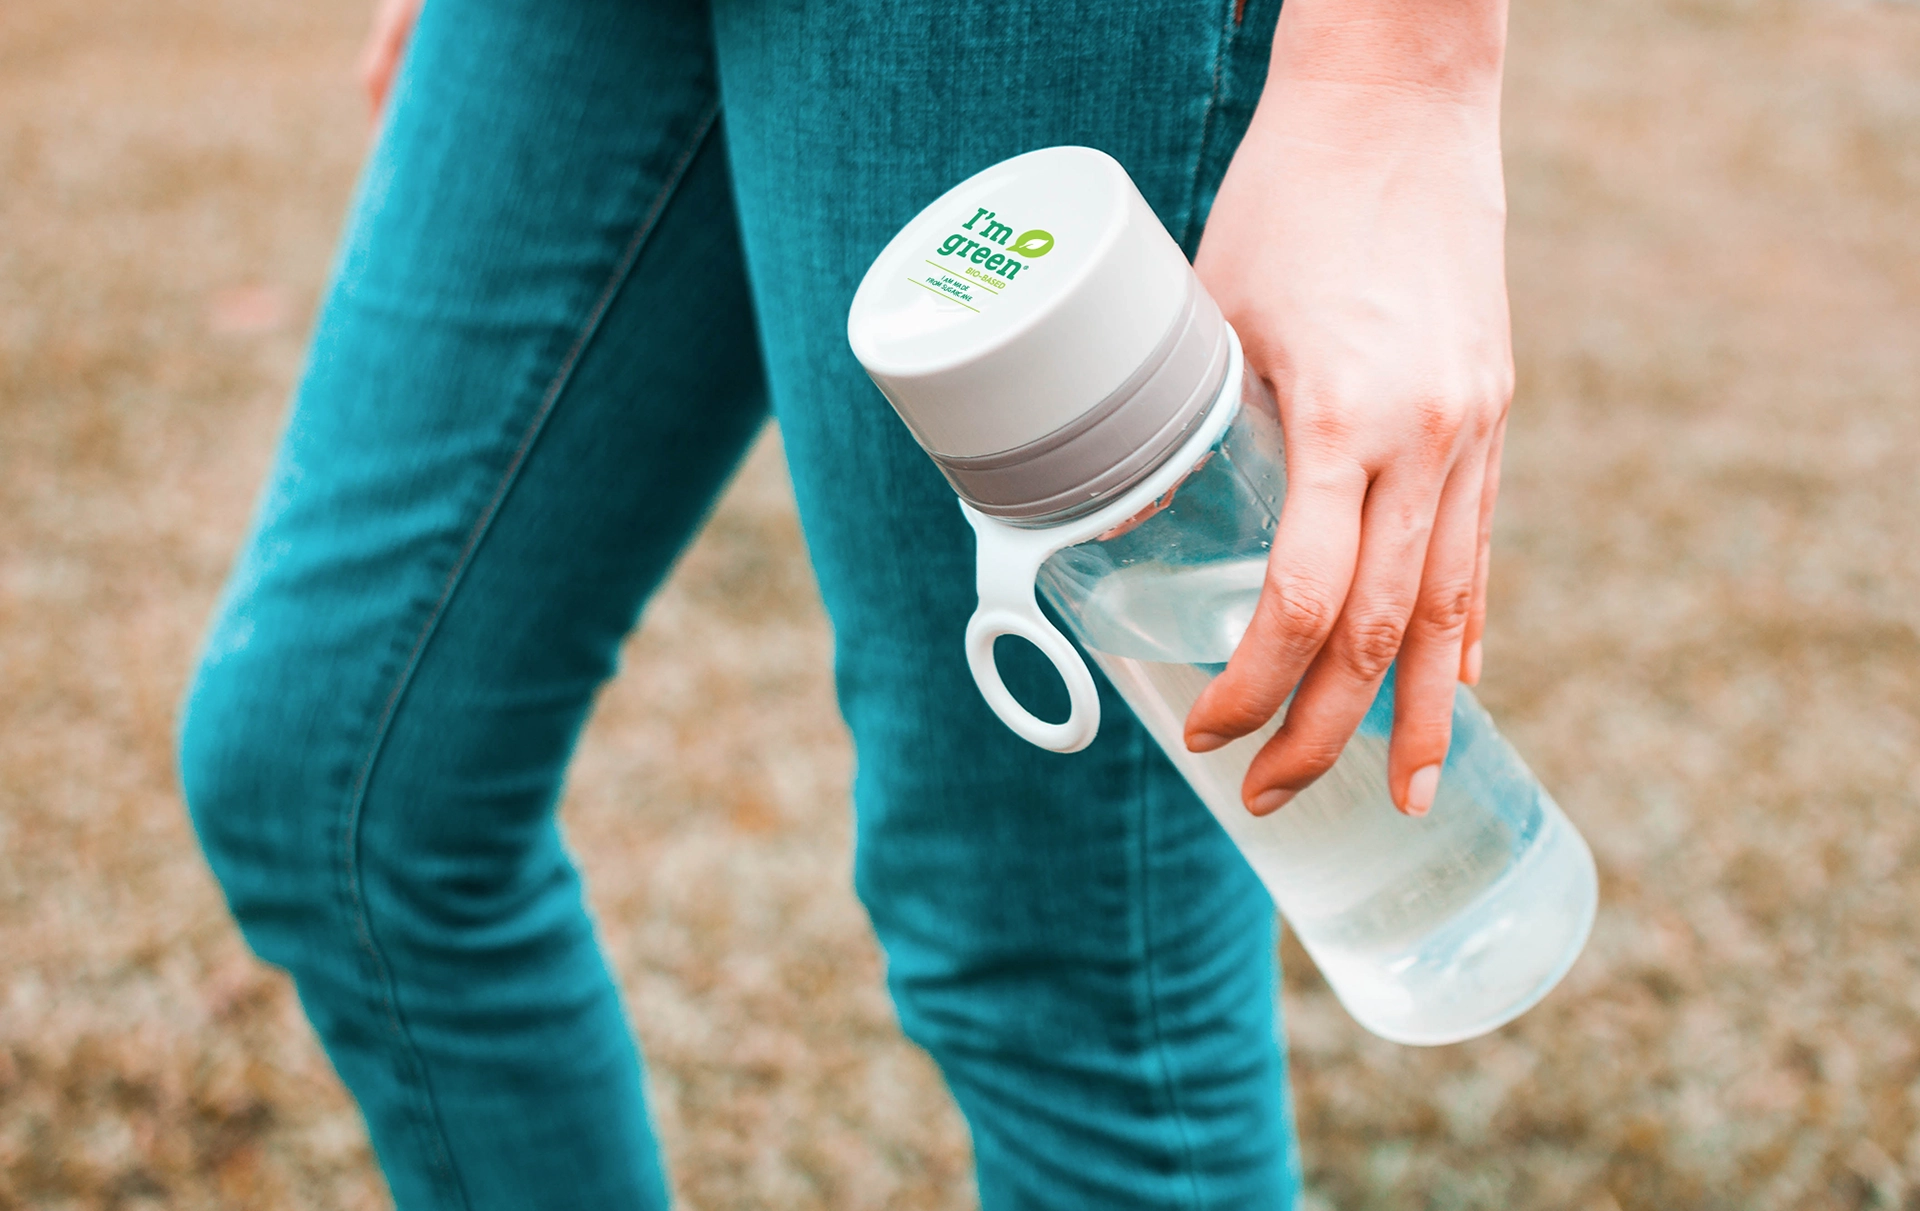 I'm green bio-based plastics enabling brands in their sustainabilty journey